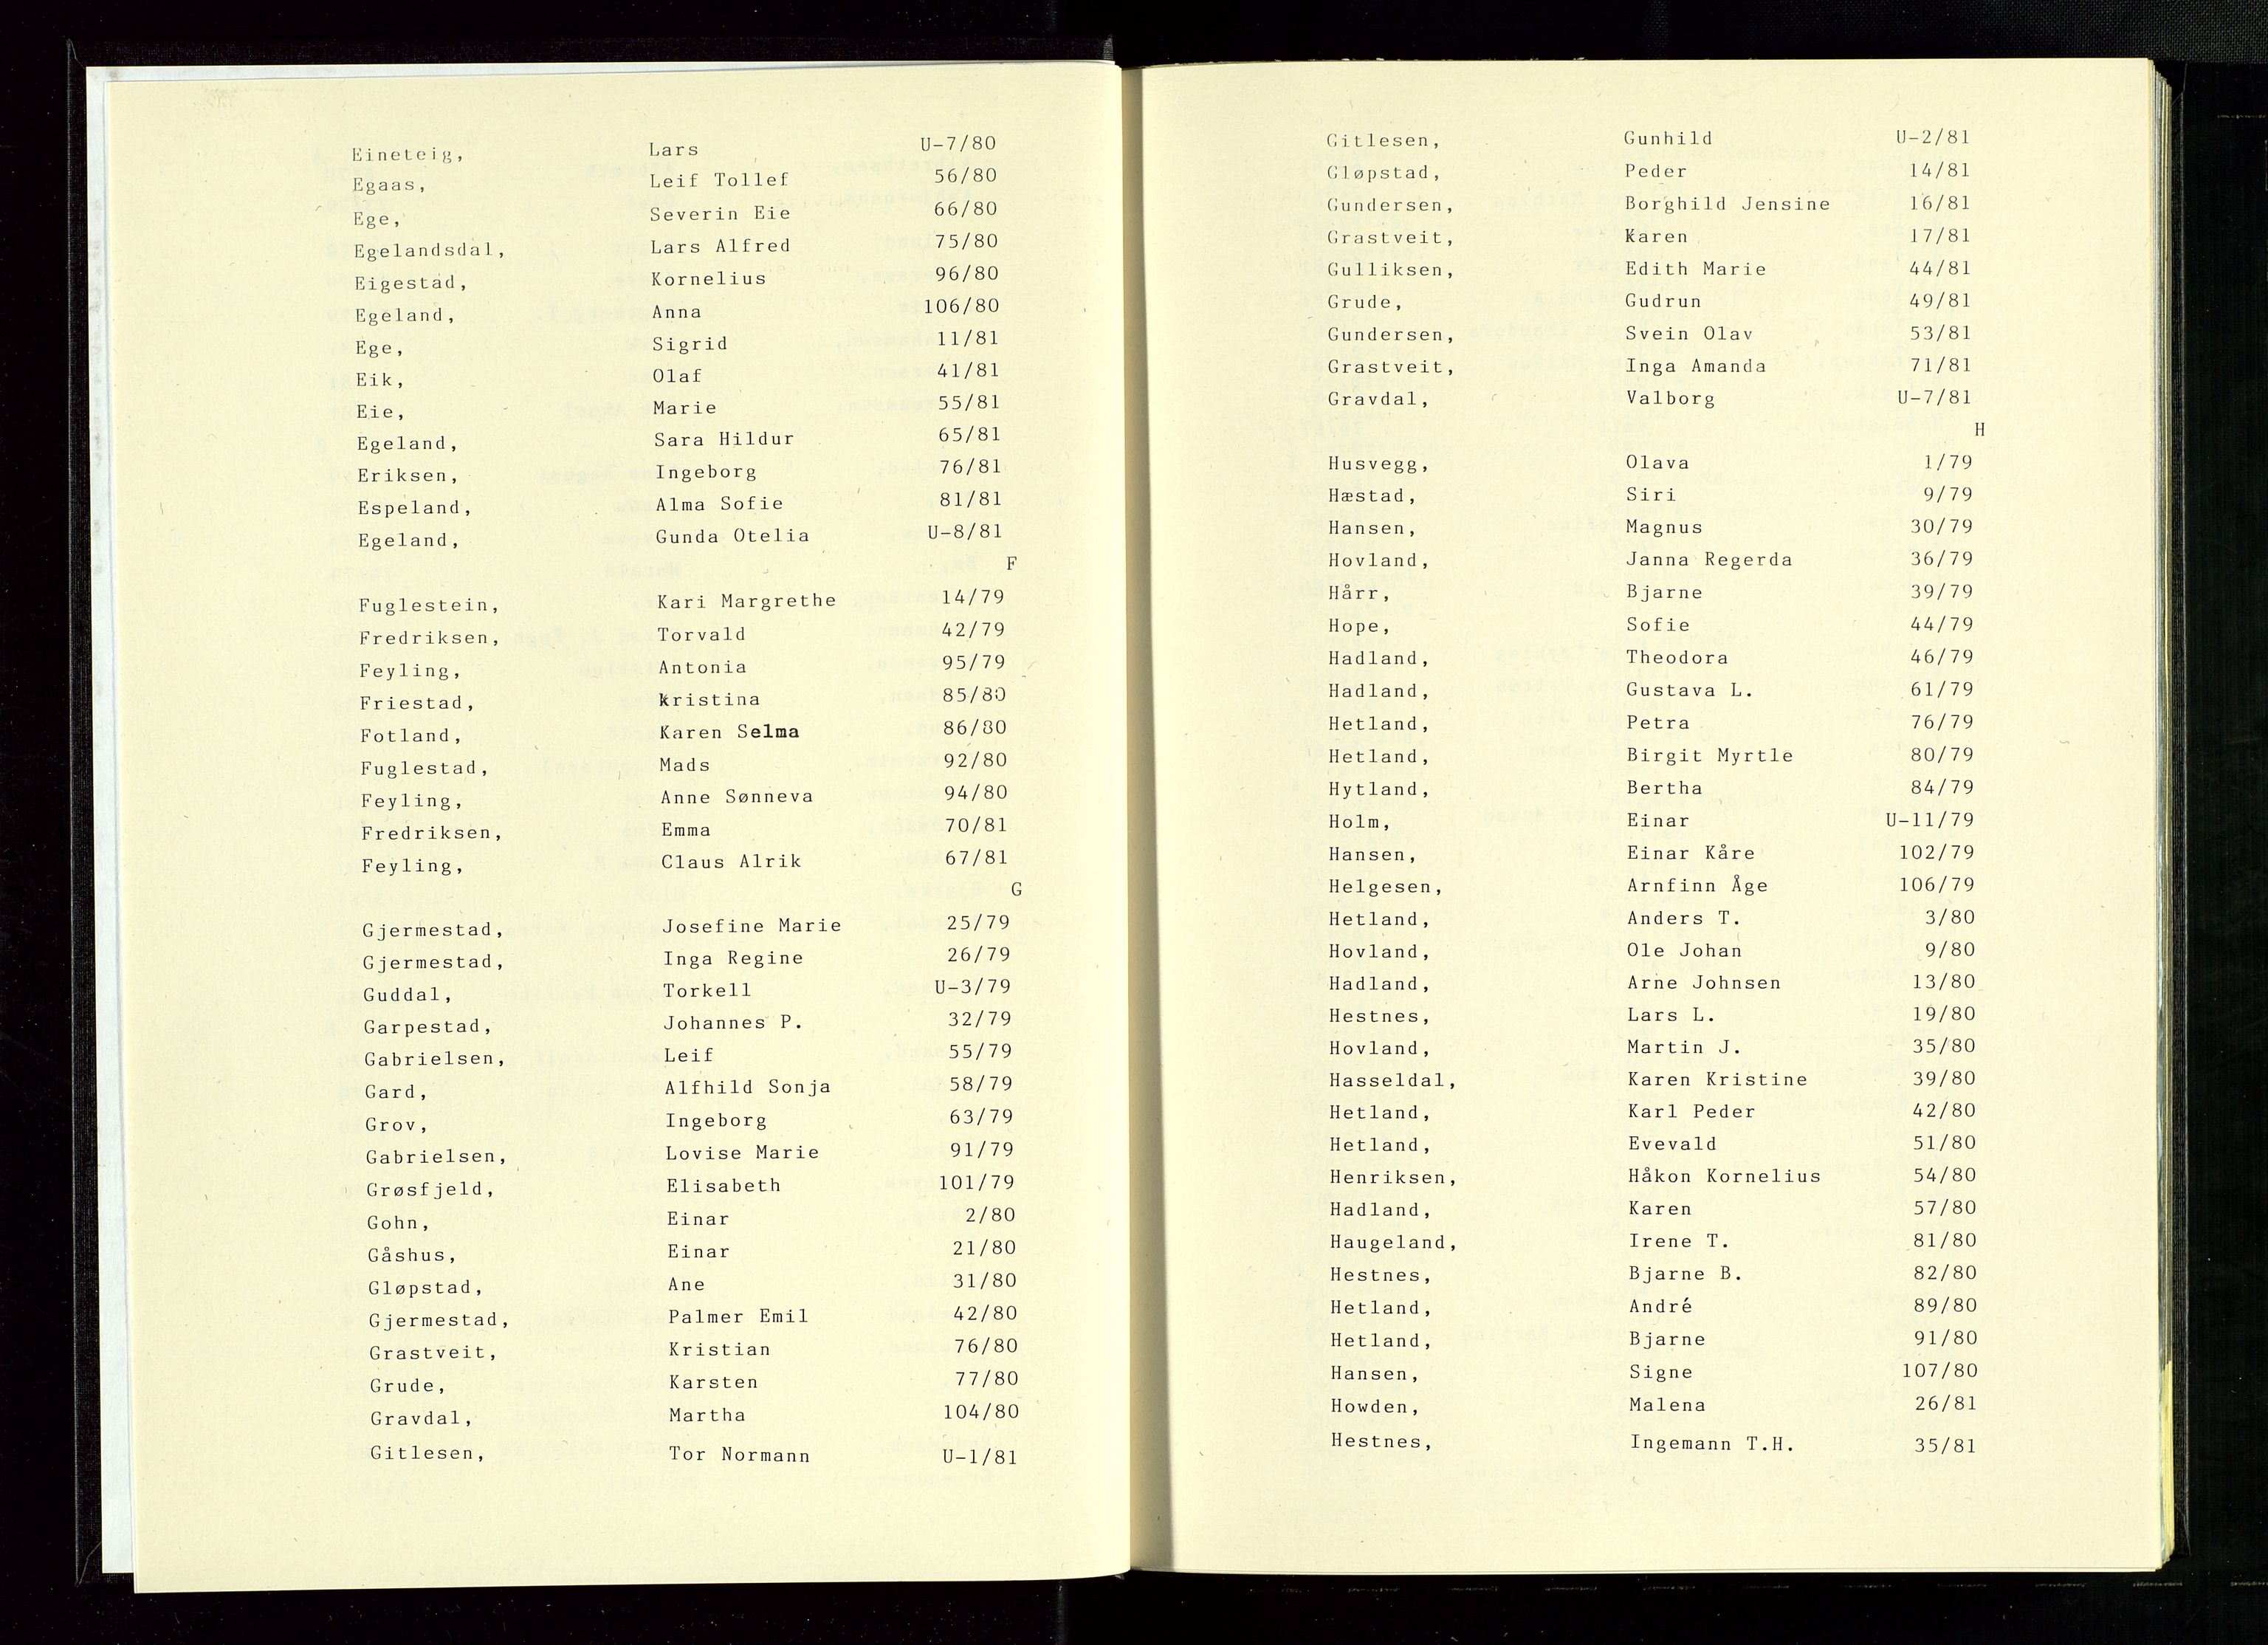 Eigersund lensmannskontor, SAST/A-100171/Gga/L0025: "Lensmannens dødsfallsprotokoll" m/alfabetisk navneregister, 1979-1981